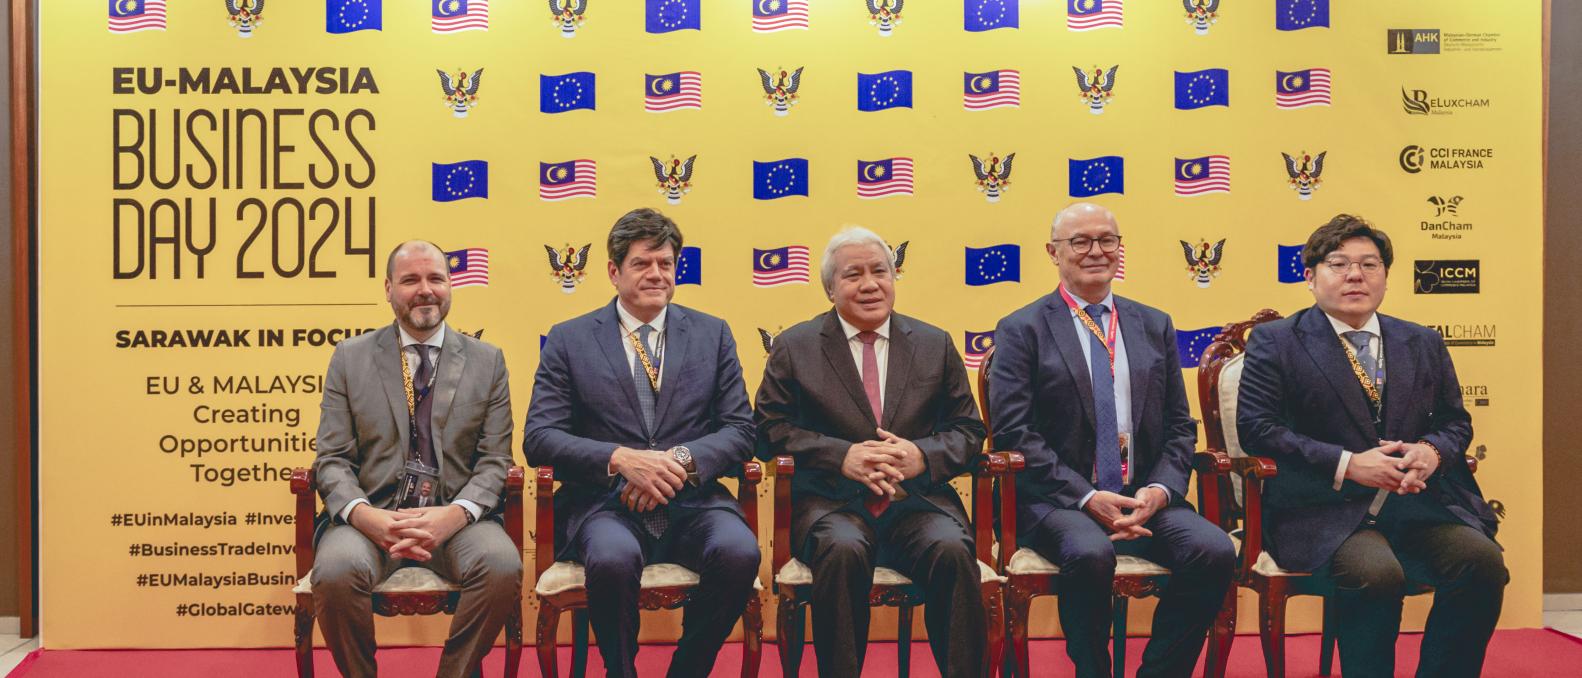 CEO Jordi Pol, Ambassador Rokas, DPM of Sarawak, Ambassador Van Acker and CEO Ong sitting in front of the EU-Malaysia Business Day bannes